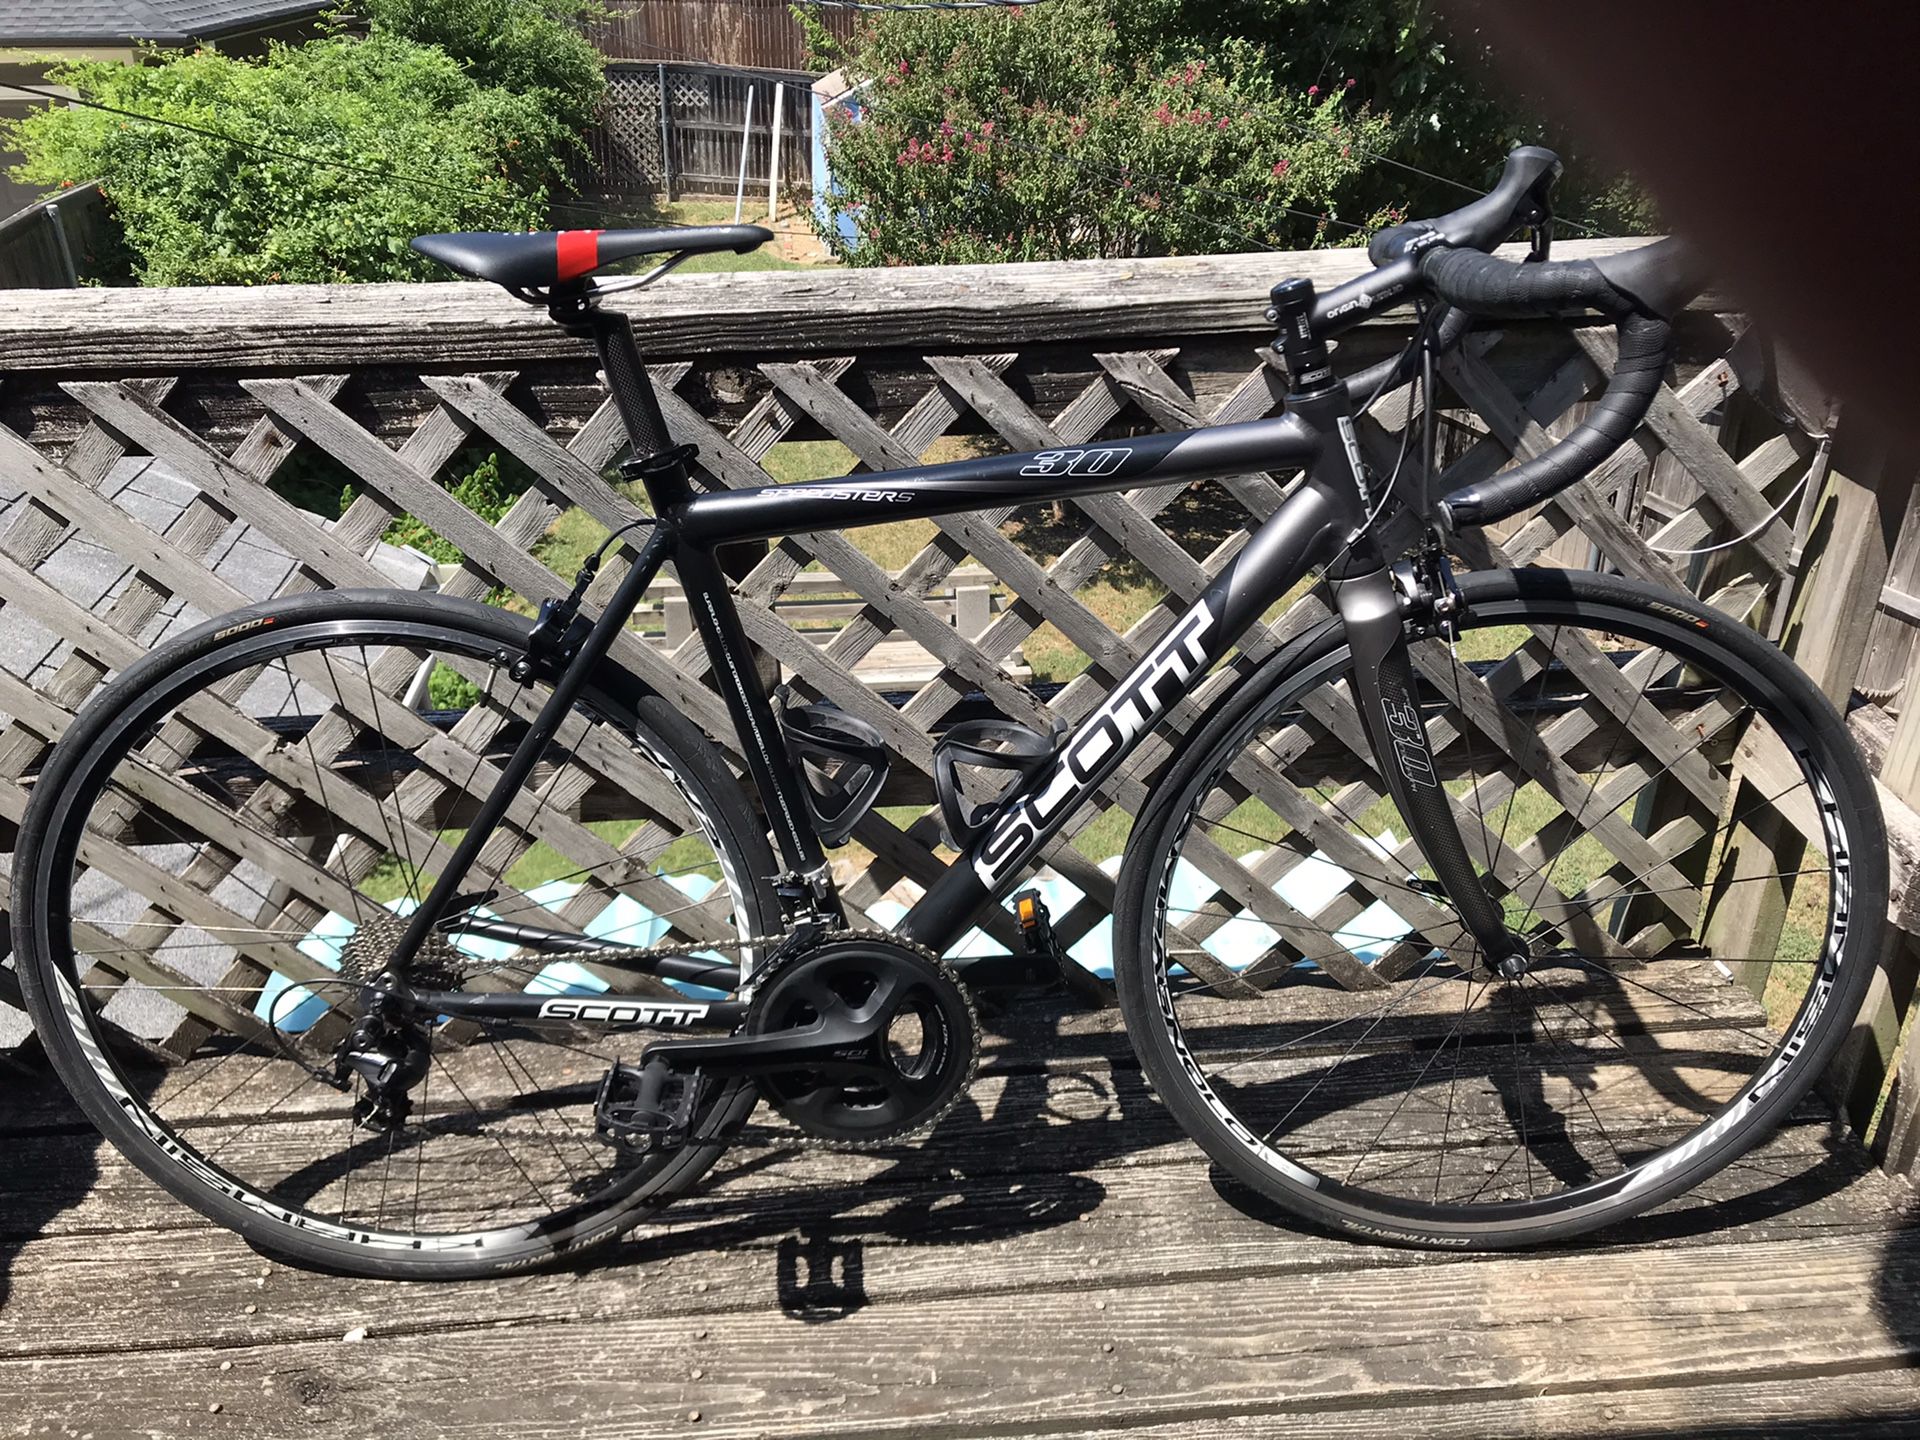 Scott road bike (52cm)